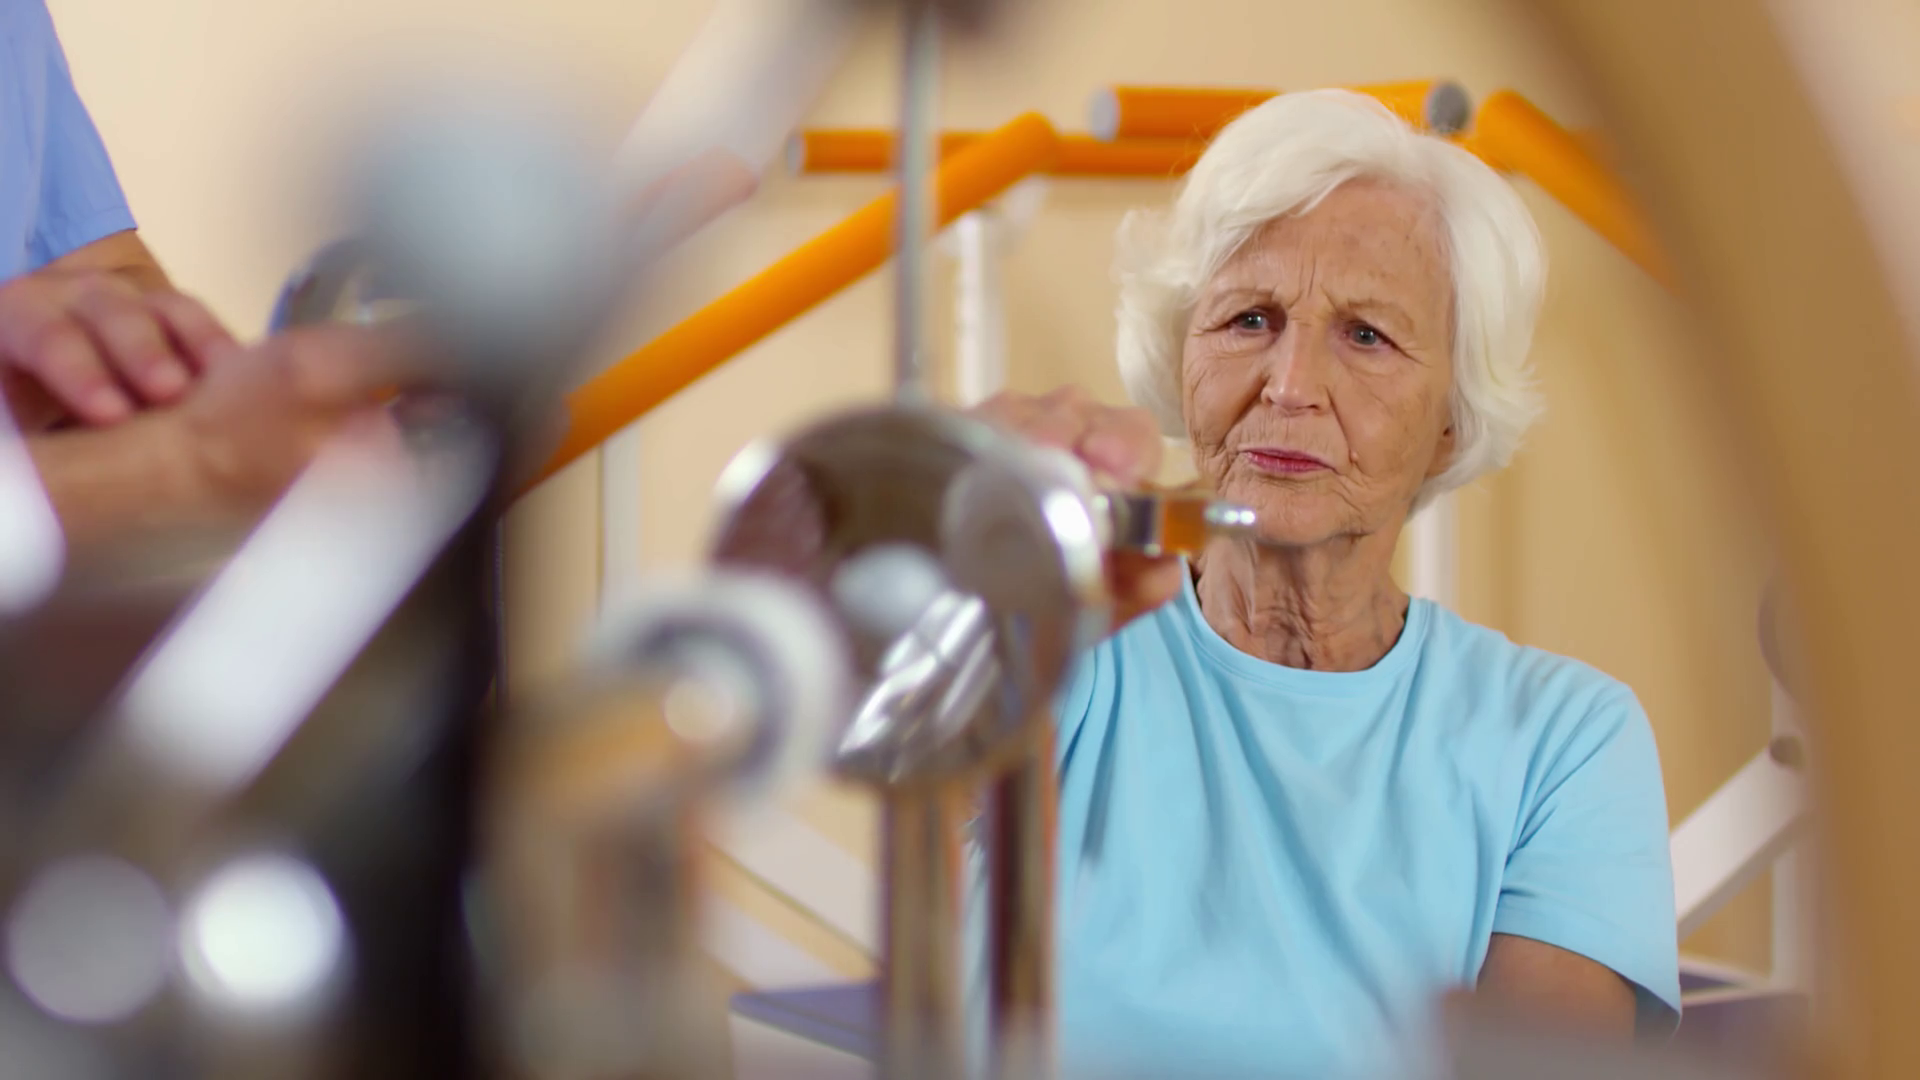 Medium Shot Of Elderly Woman With Grey Hair Using Rotating Wrist